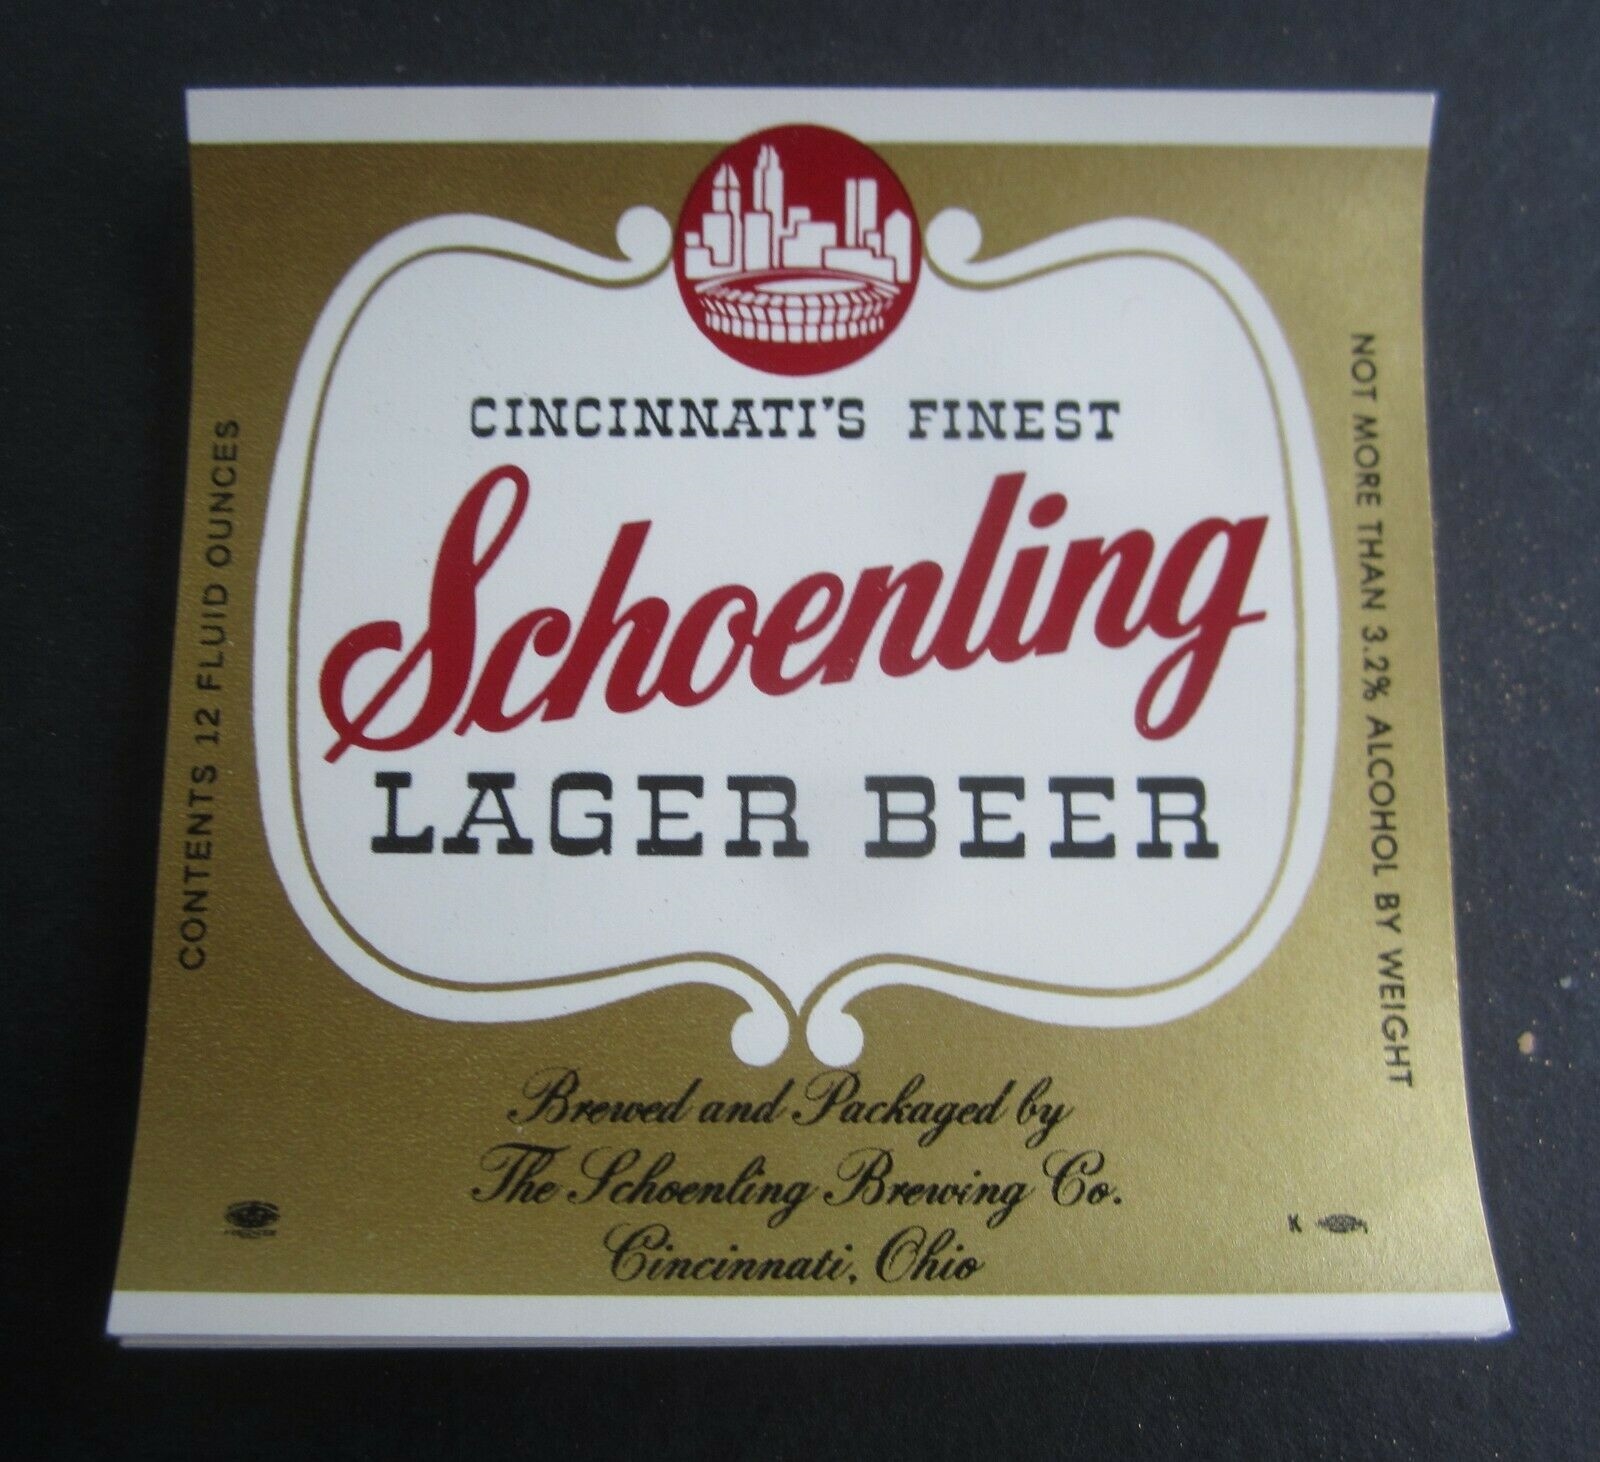  Lot of 50 Old Vintage - Schoenling Lager BEER ...